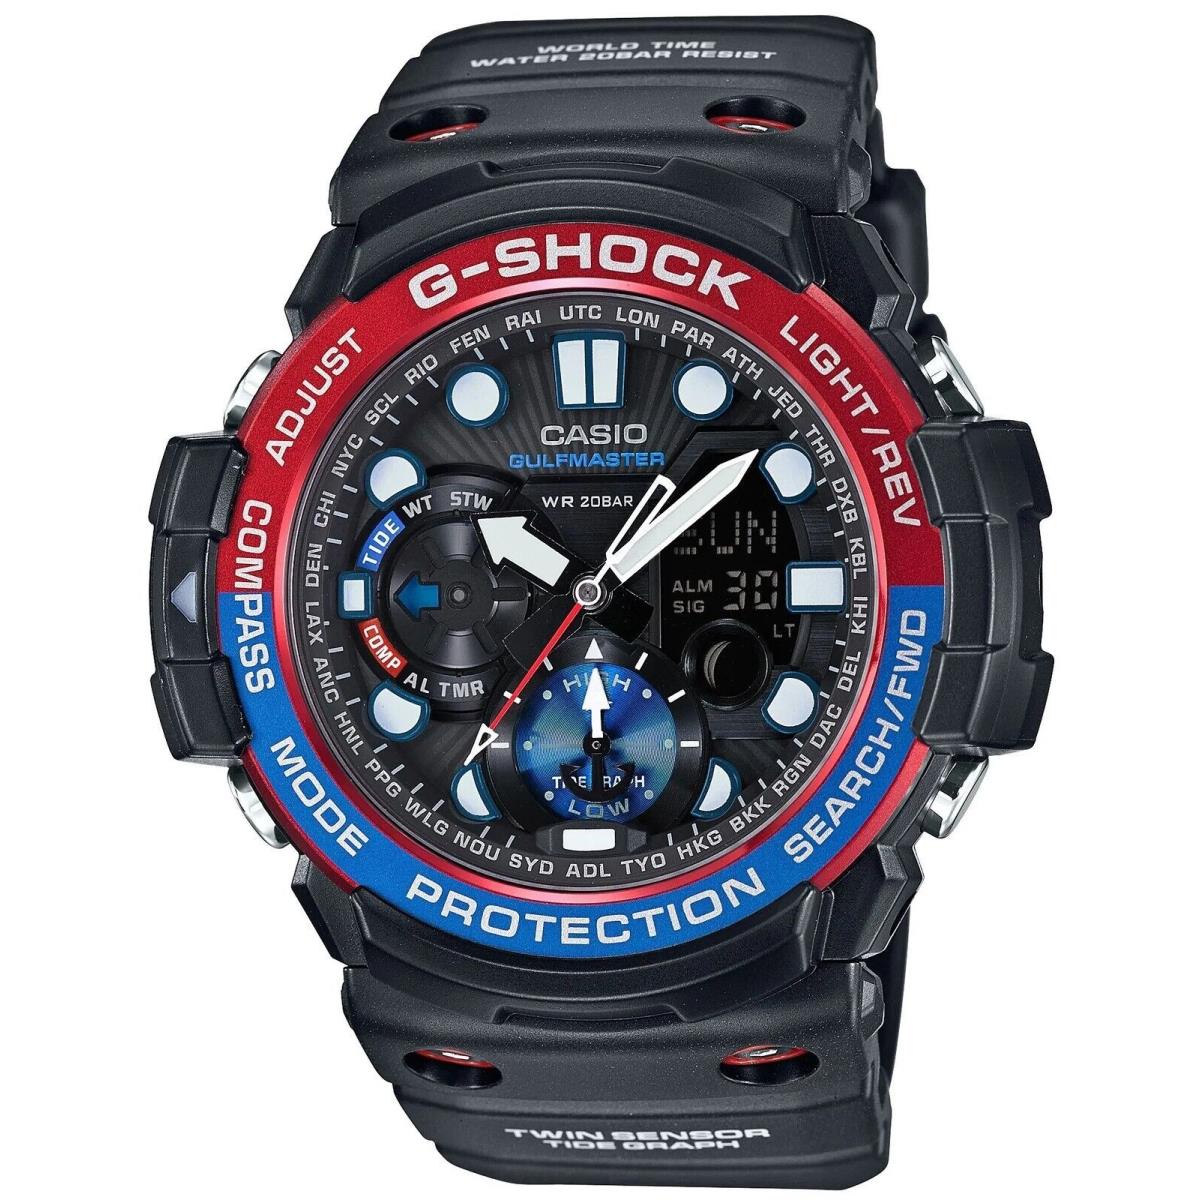 G-shock Casio Mens Watch Gulfmaster GN-1000-1AJF Black Red Blue